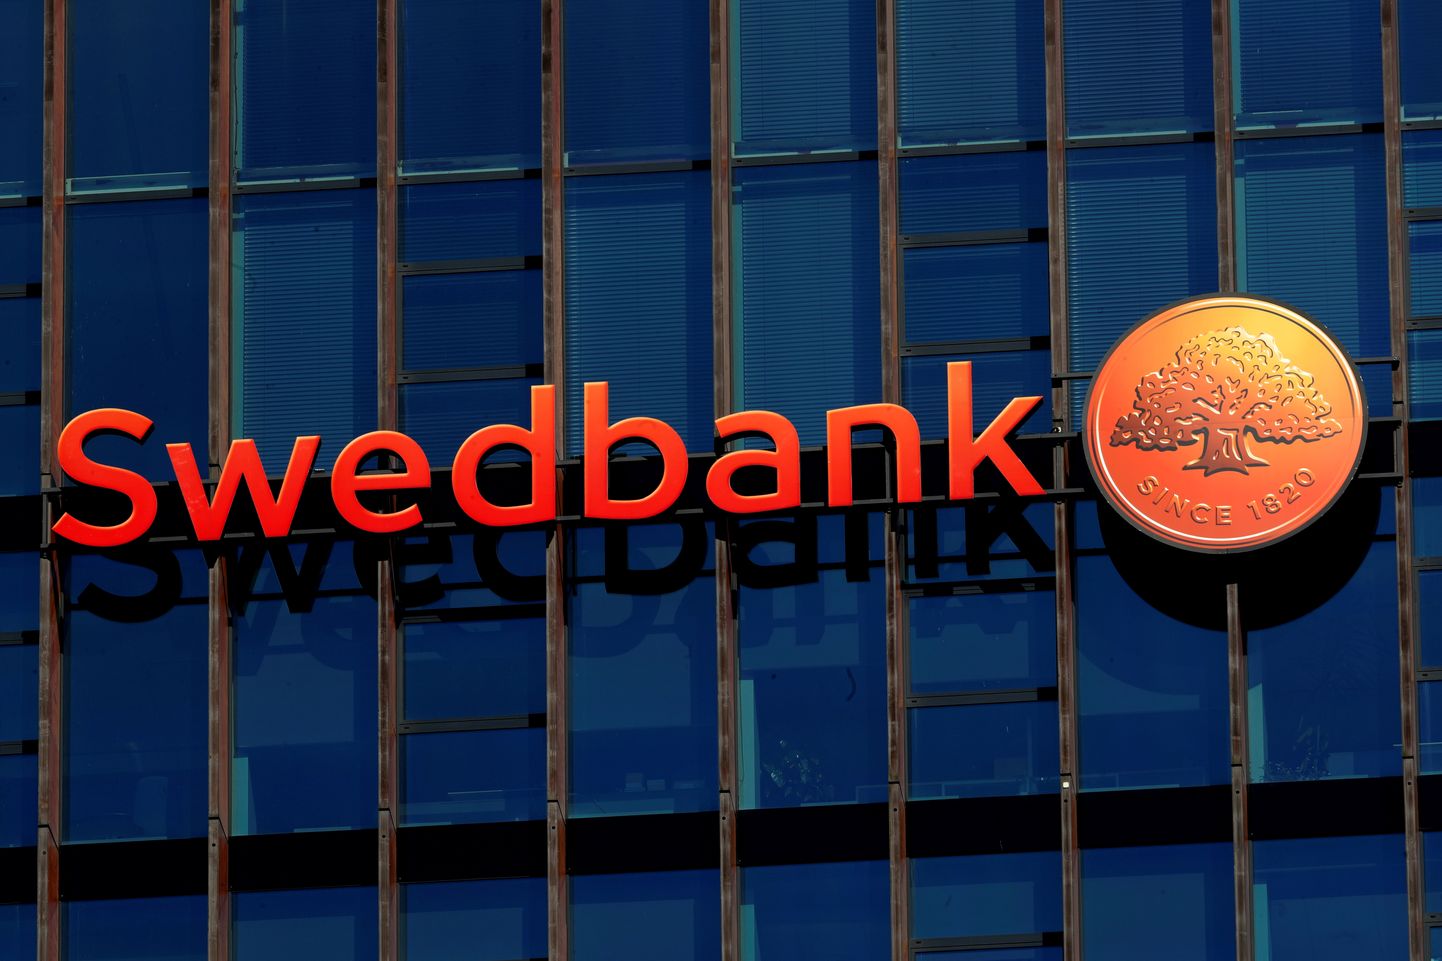 Swedbanki logo. Pilt on illustratiivne.